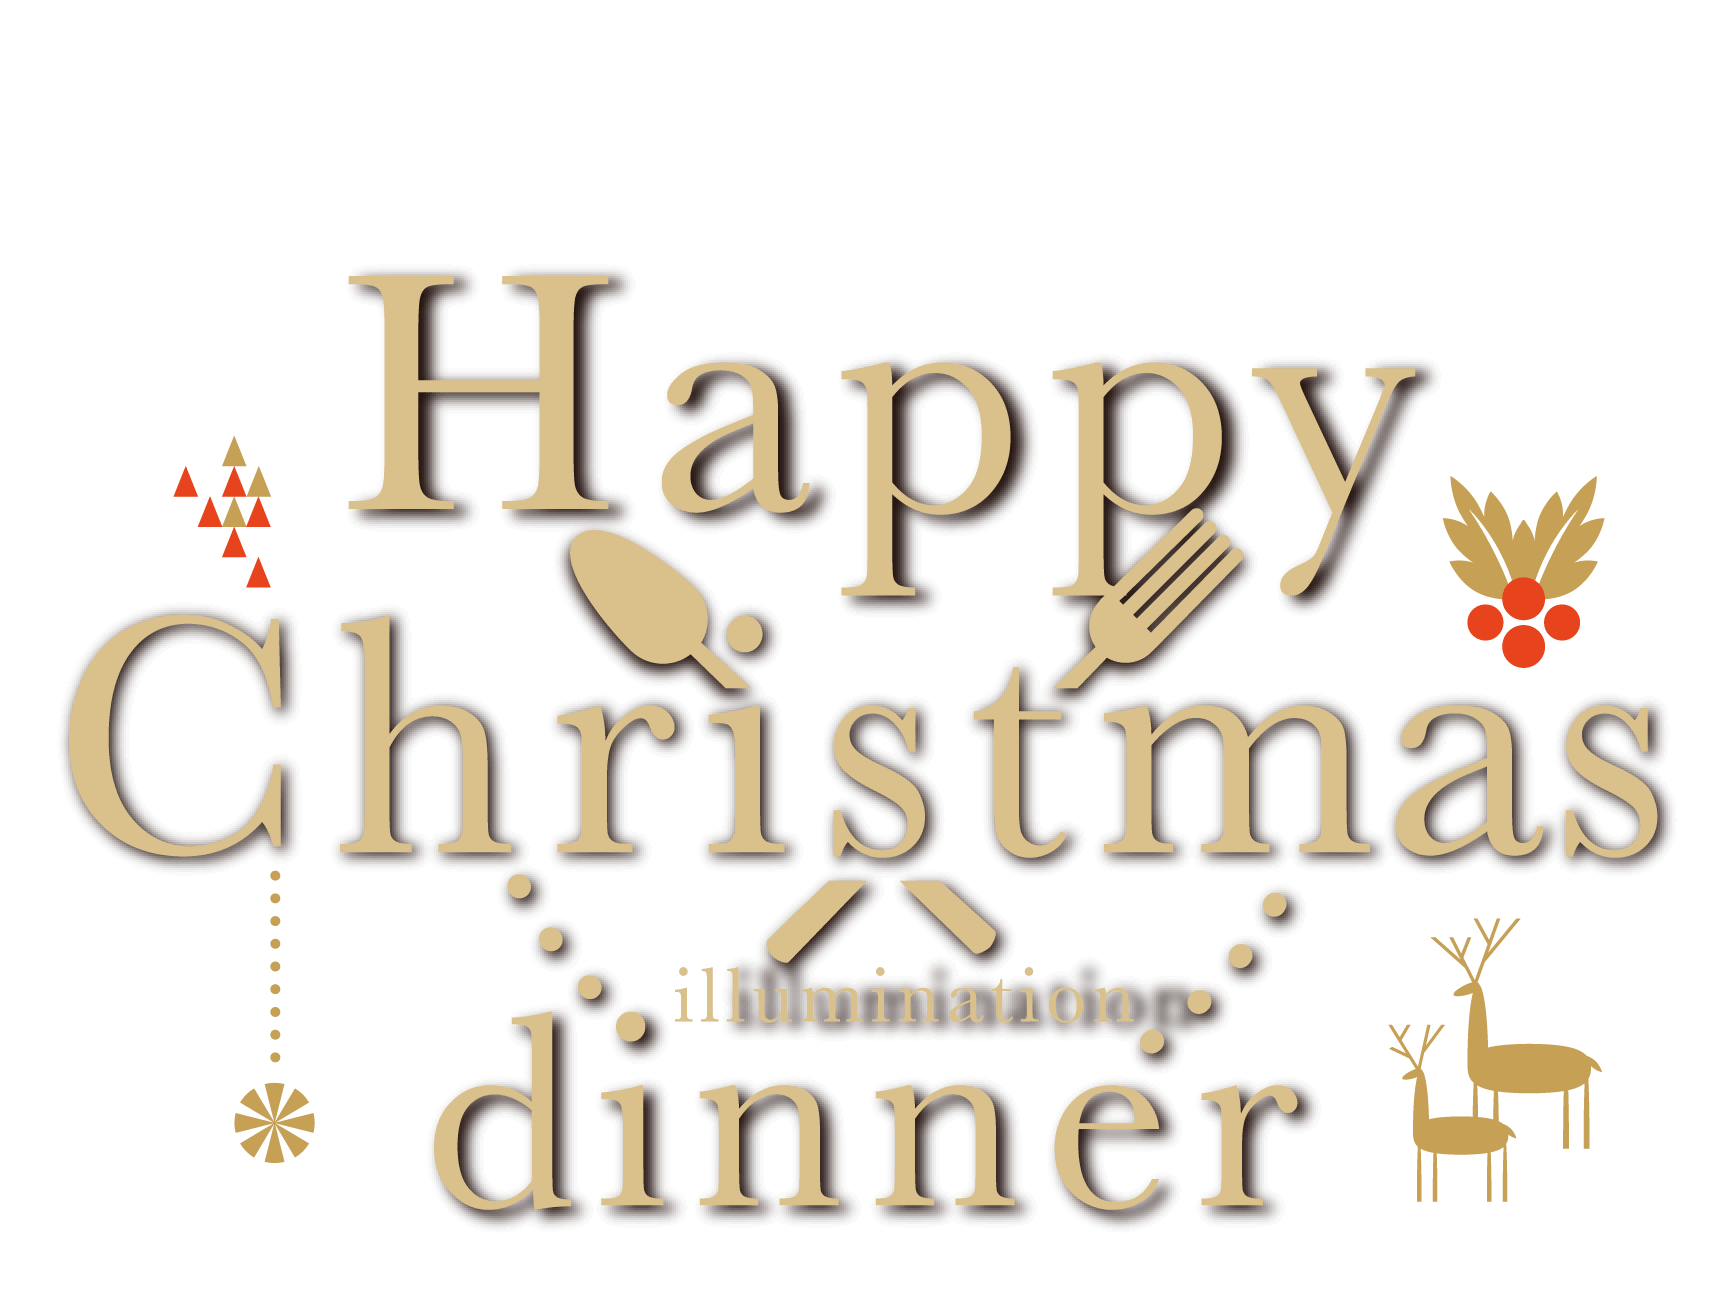 2020 MIYANOMORI FRANCES Happy Chiristmas dinner